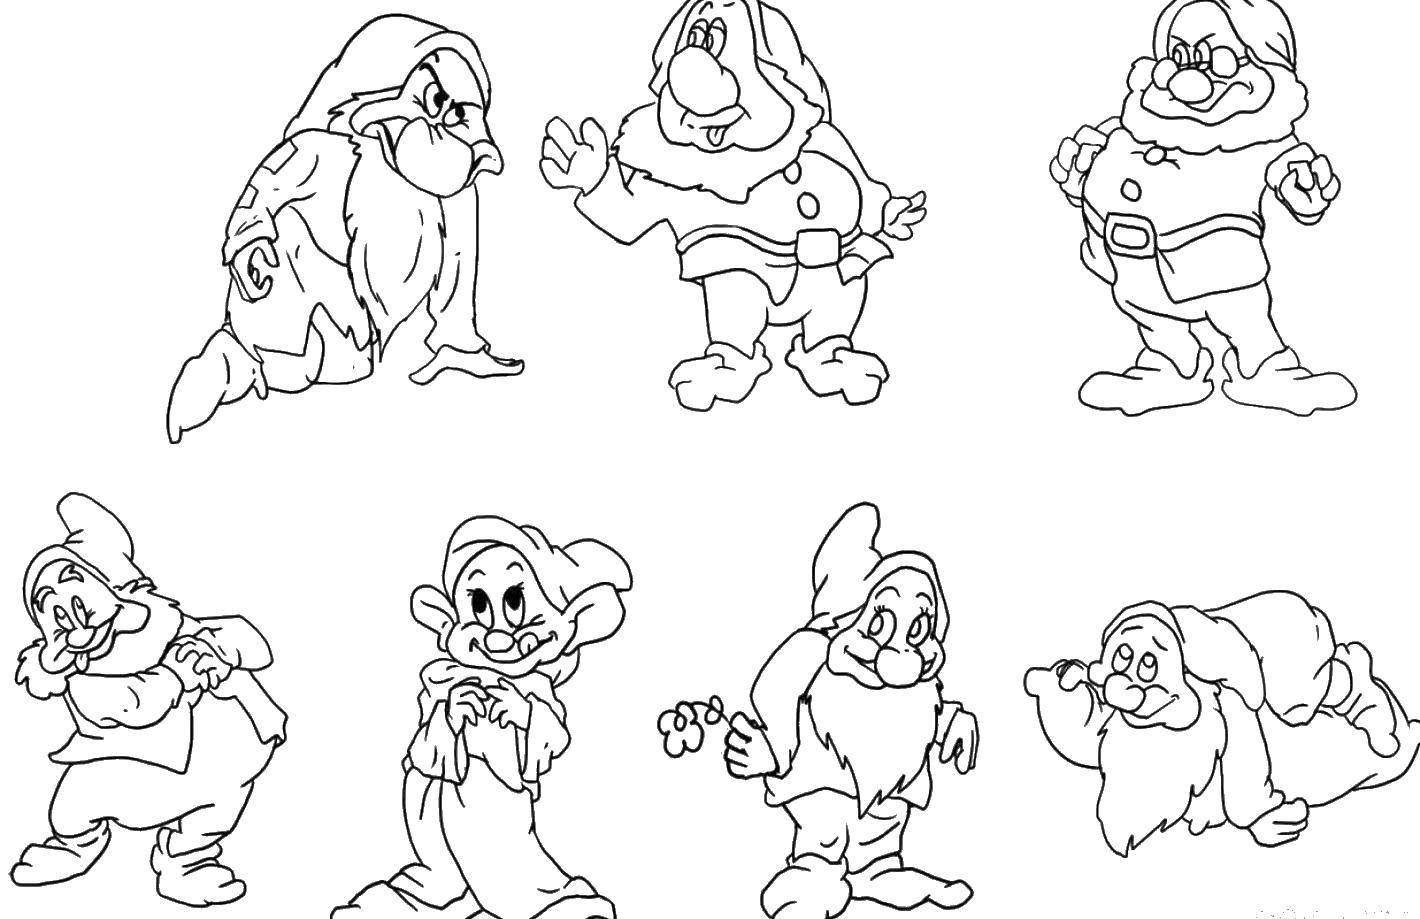 Coloring The 7 dwarfs. Category snow white. Tags:  Disney, Snow white, 7 dwarfs.